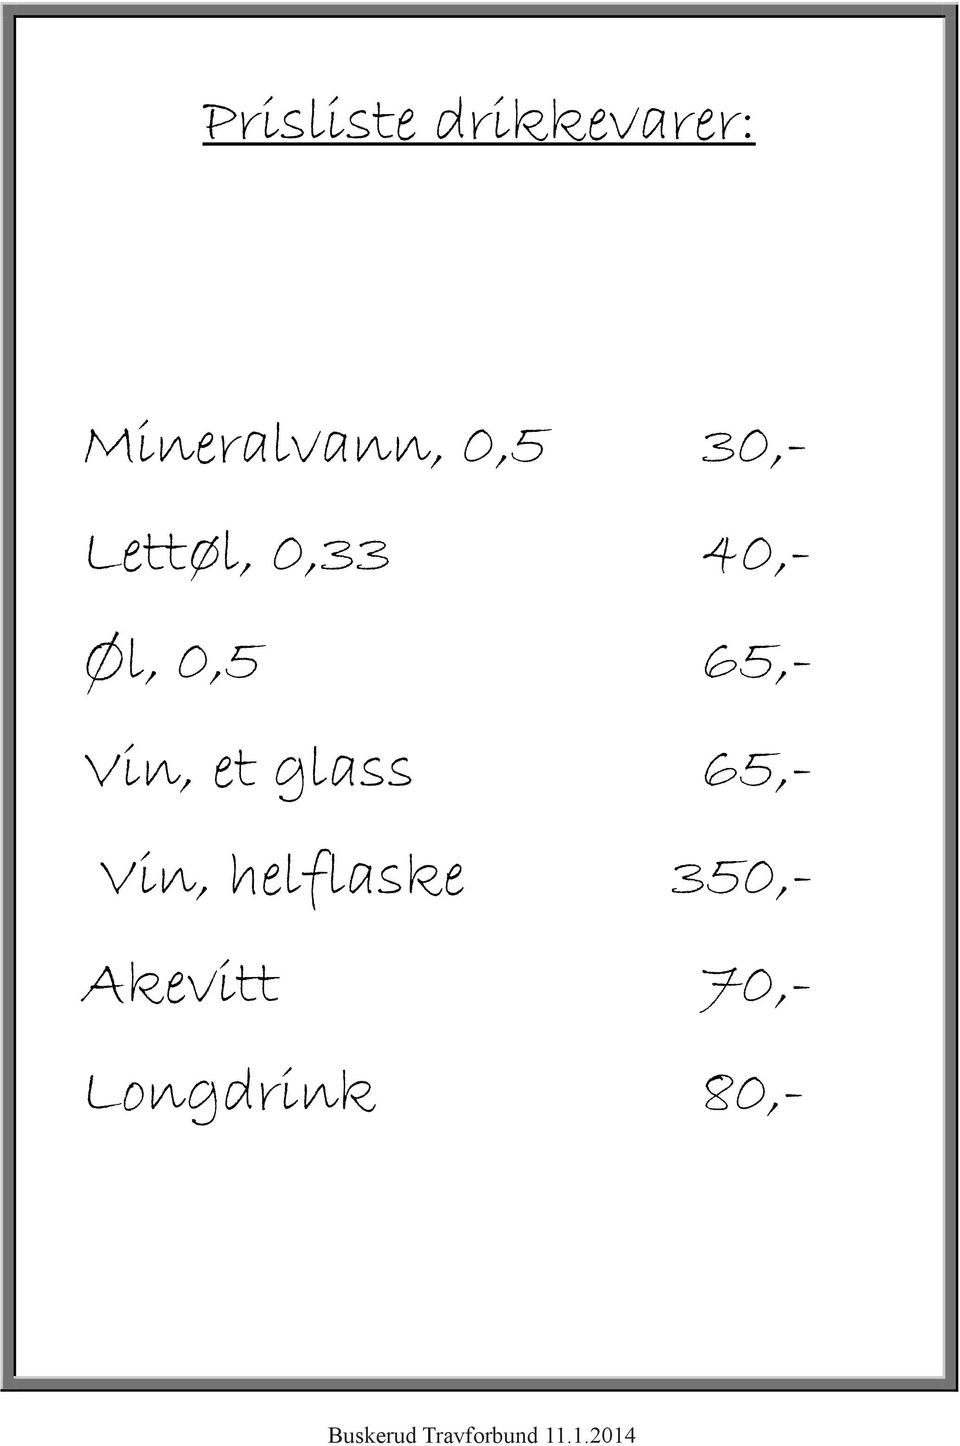 glass 65,- Vin, helflaske 350,- Akevitt